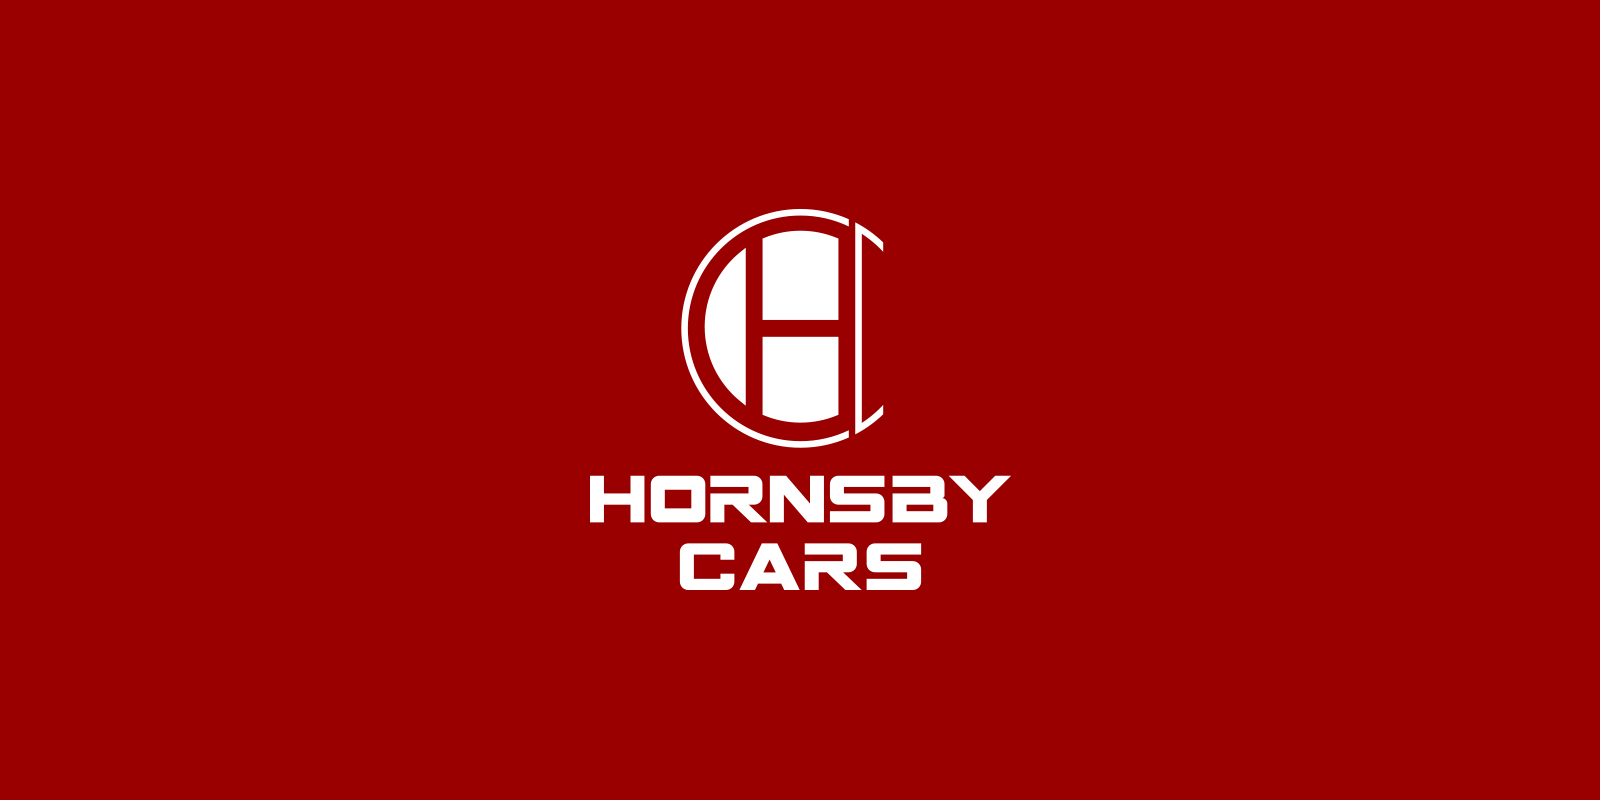 Hornsby cars logo concept